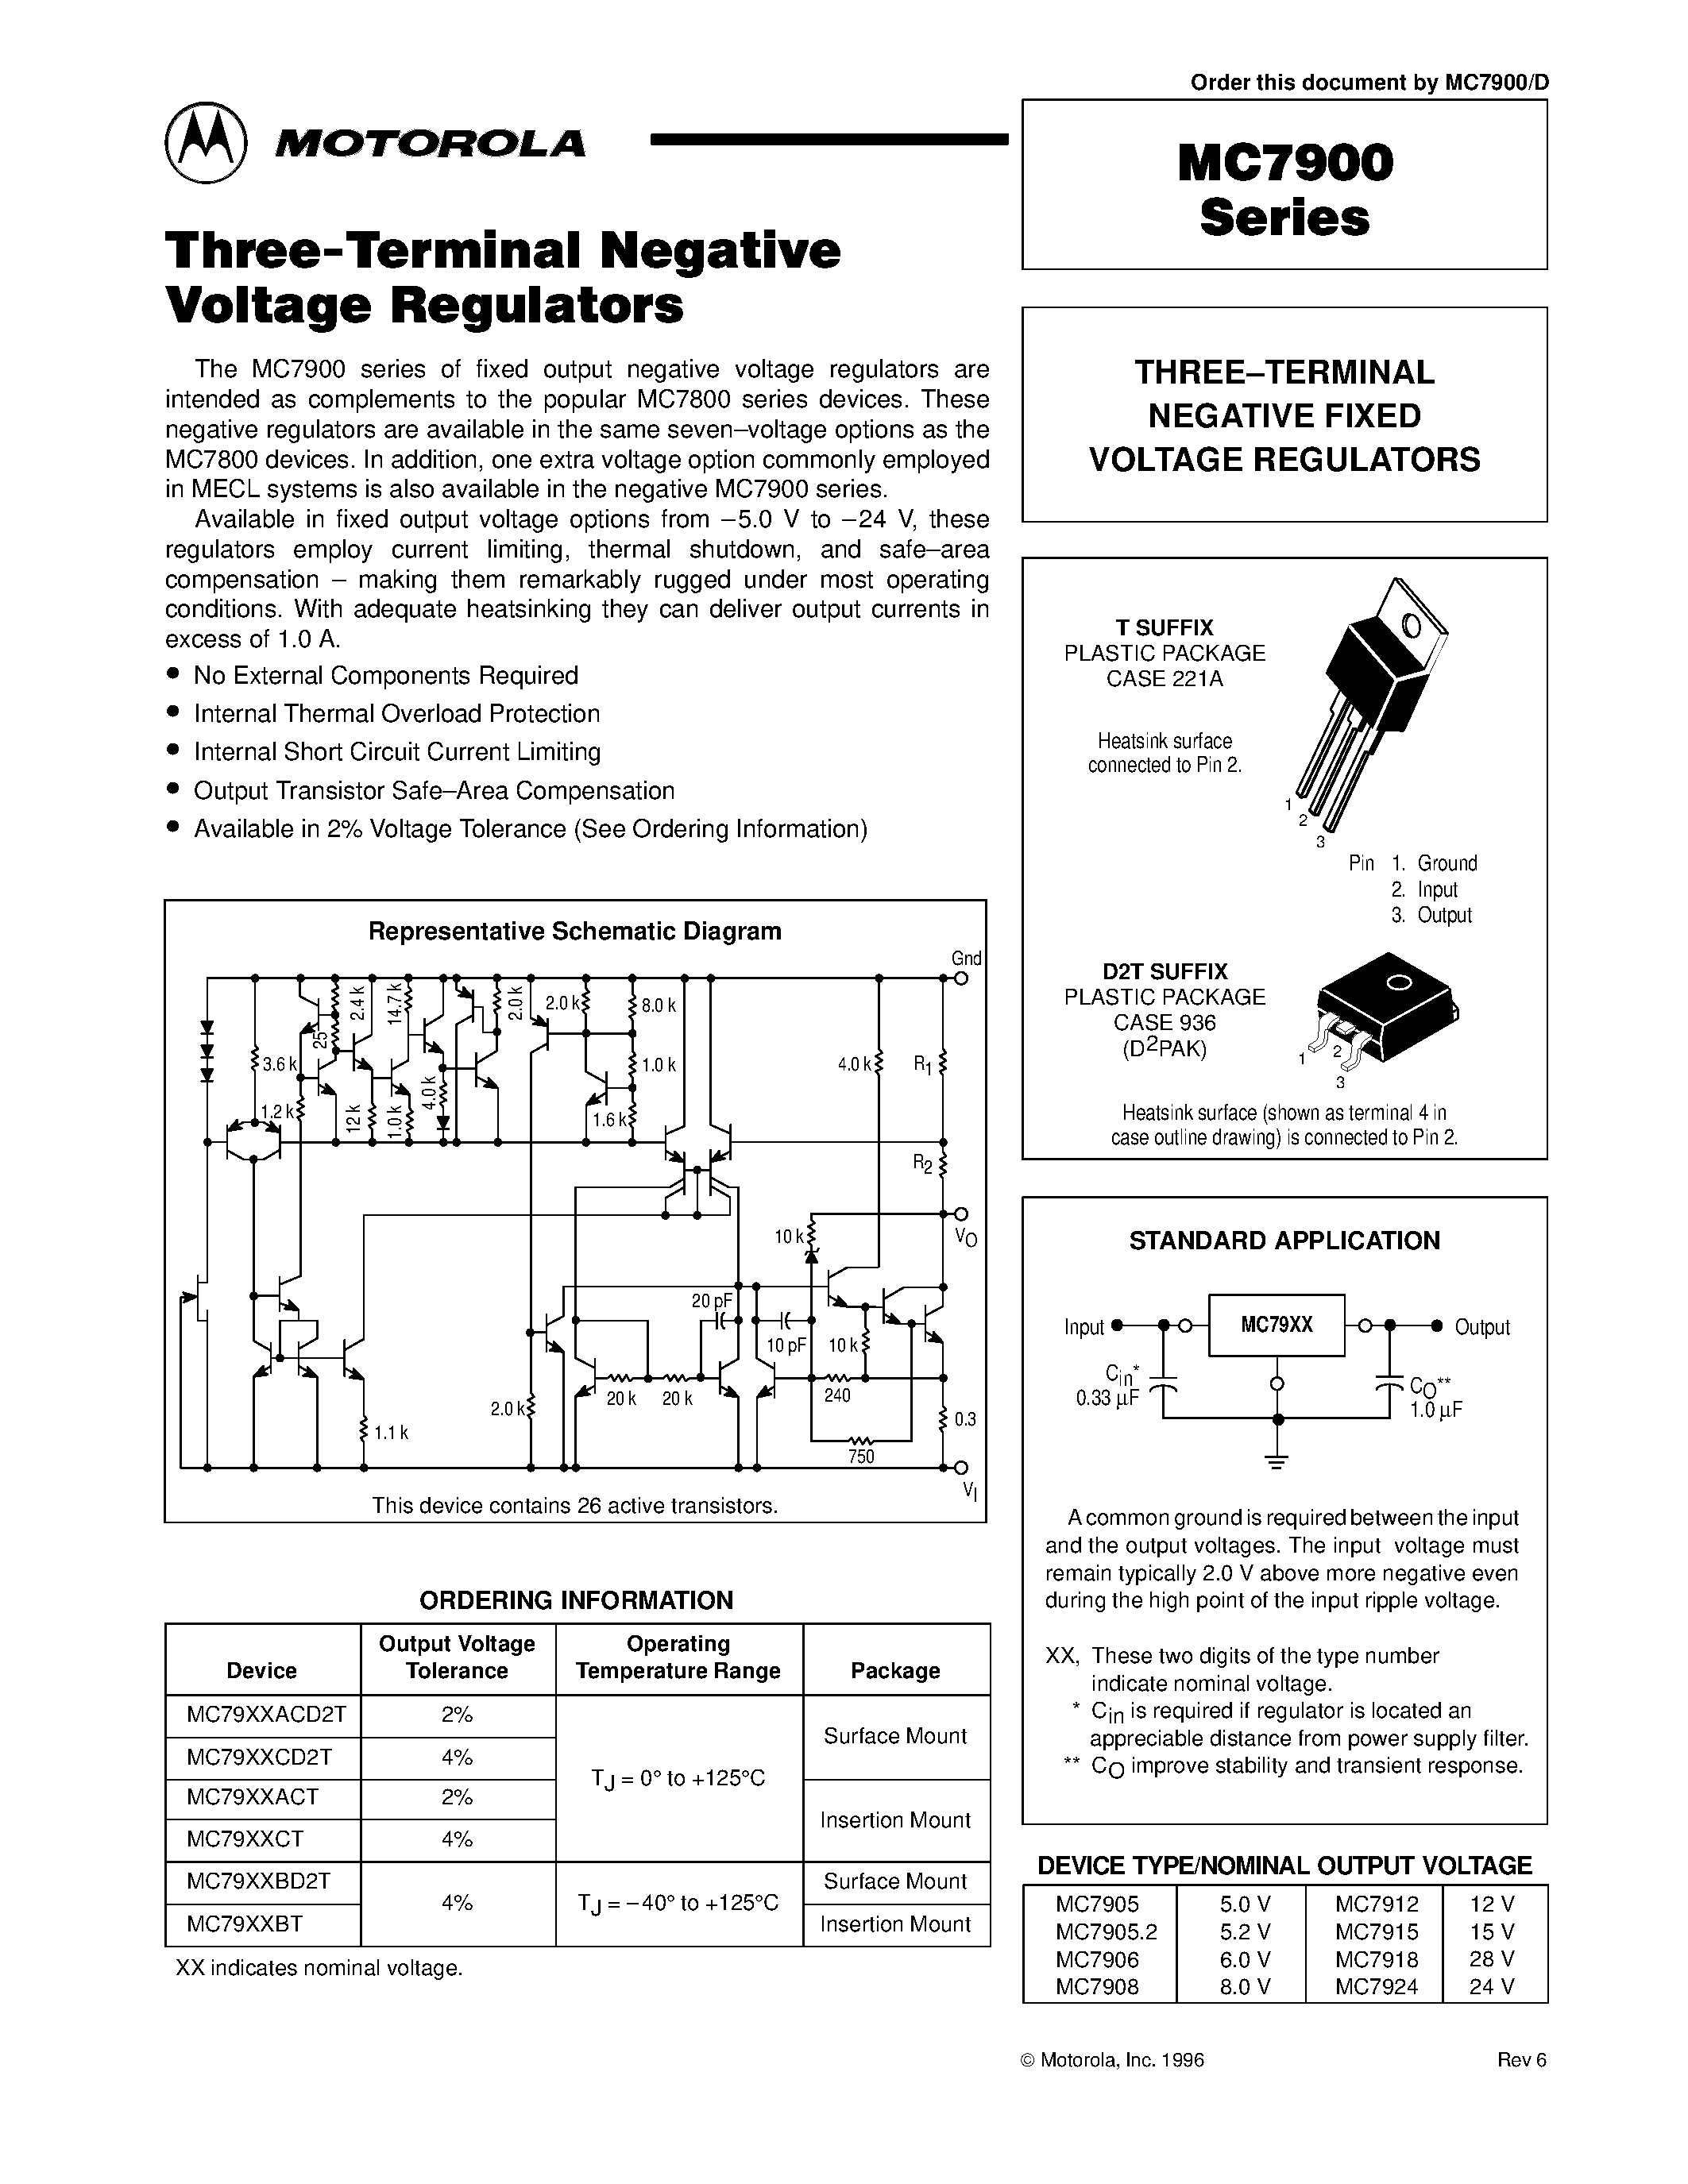 Datasheet MC7905CDST - THREE-TERMINAL NEGATIVE FIXED VOLTAGE REGULATORS page 1